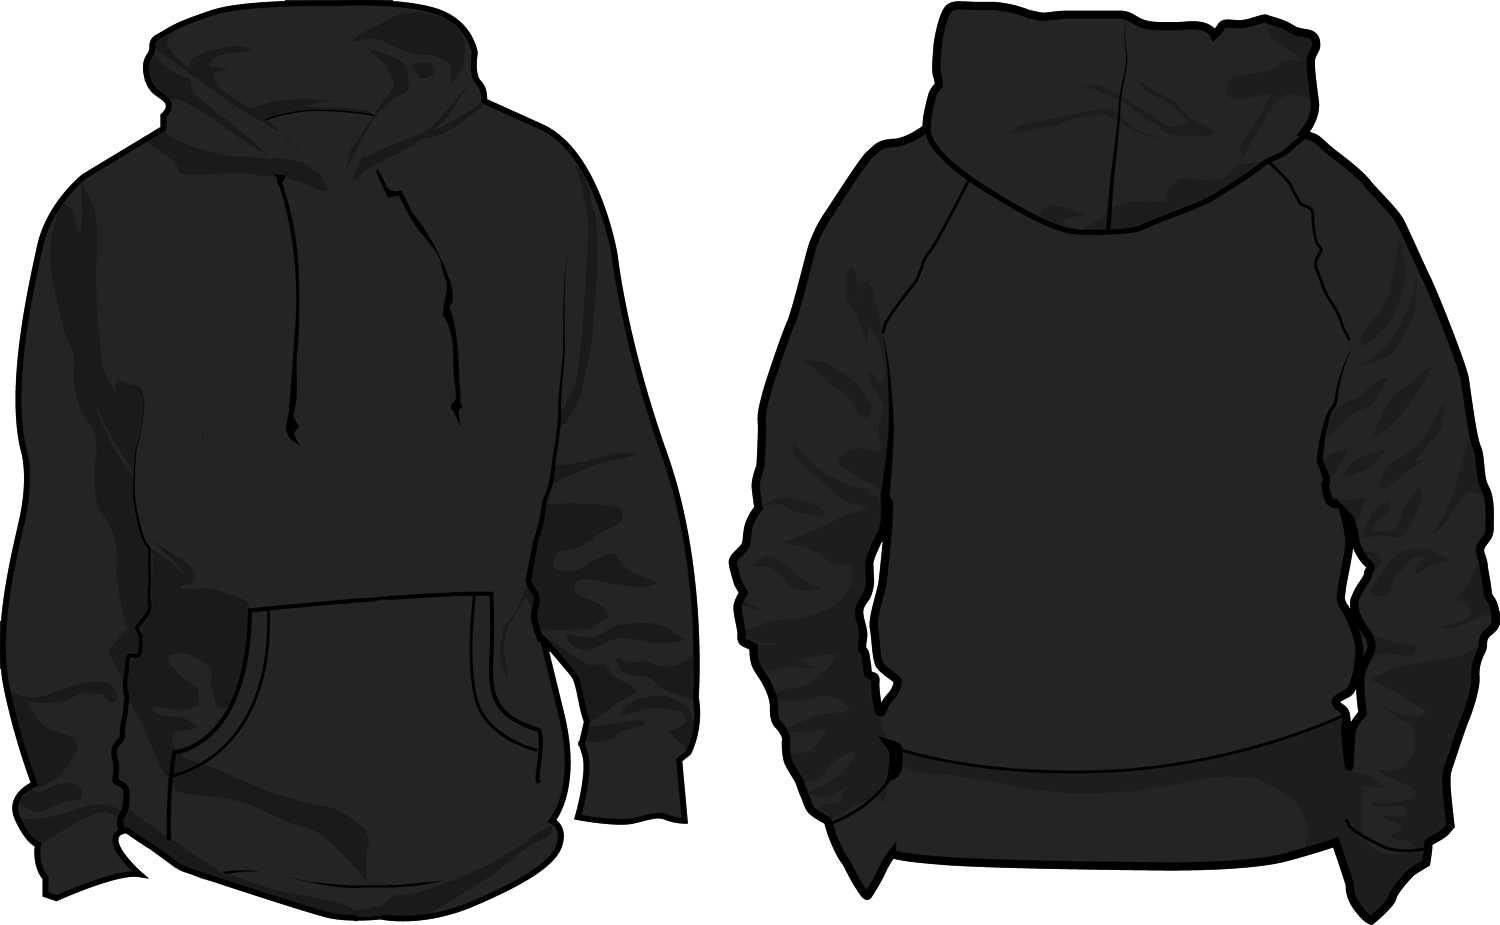 10 Pullover Hoodie Template Images – Black Blank Hoodie With Blank Black Hoodie Template